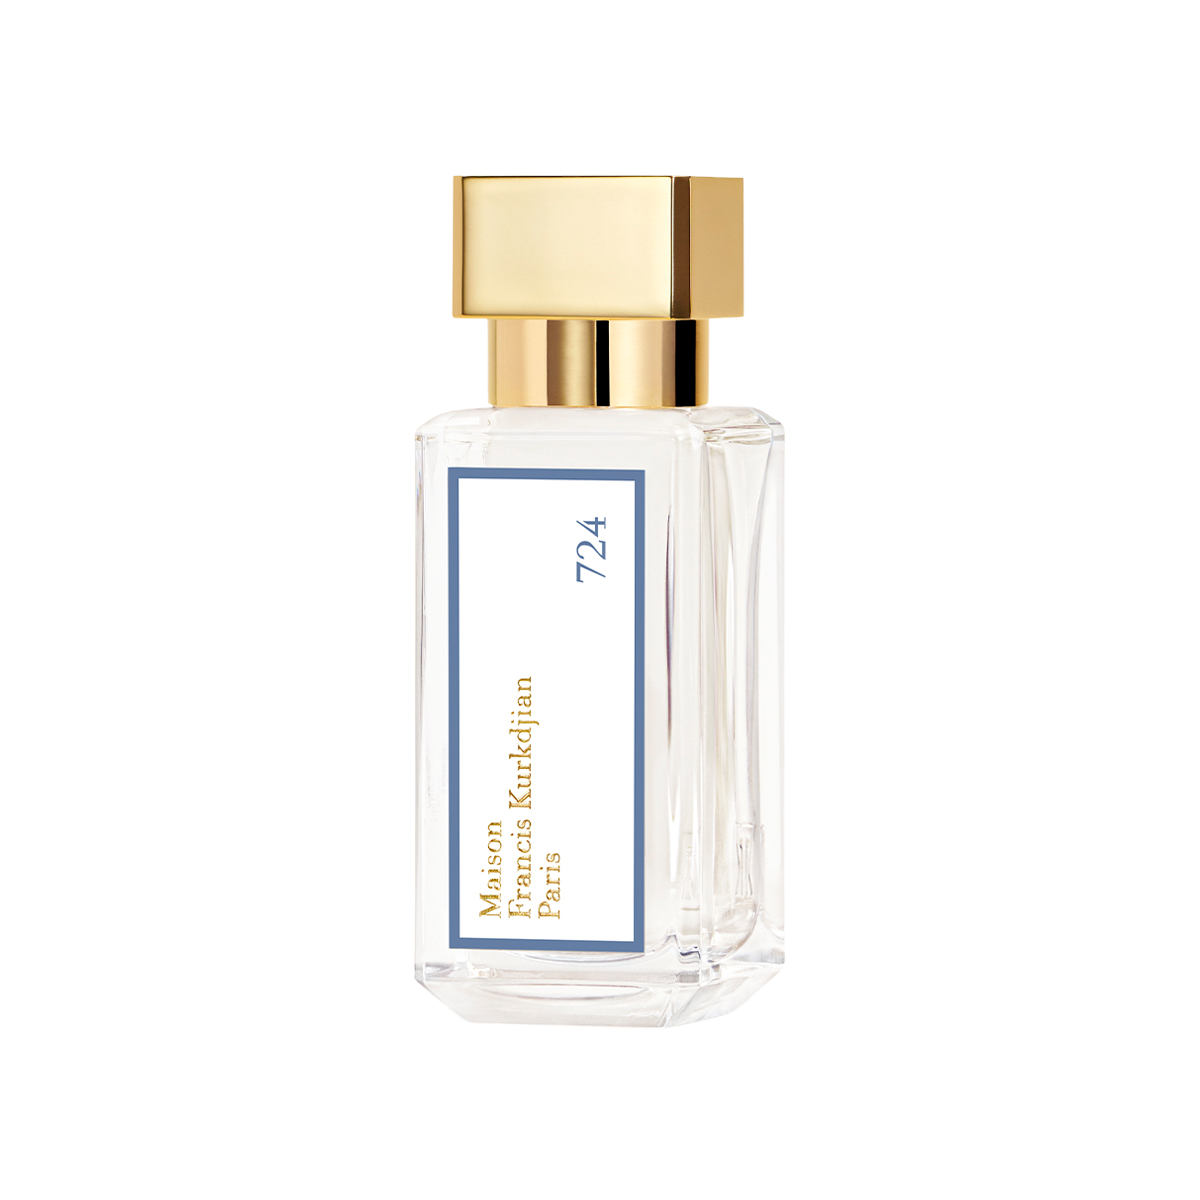 Maison Francis Kurkdjian - 724 Eau de Parfum